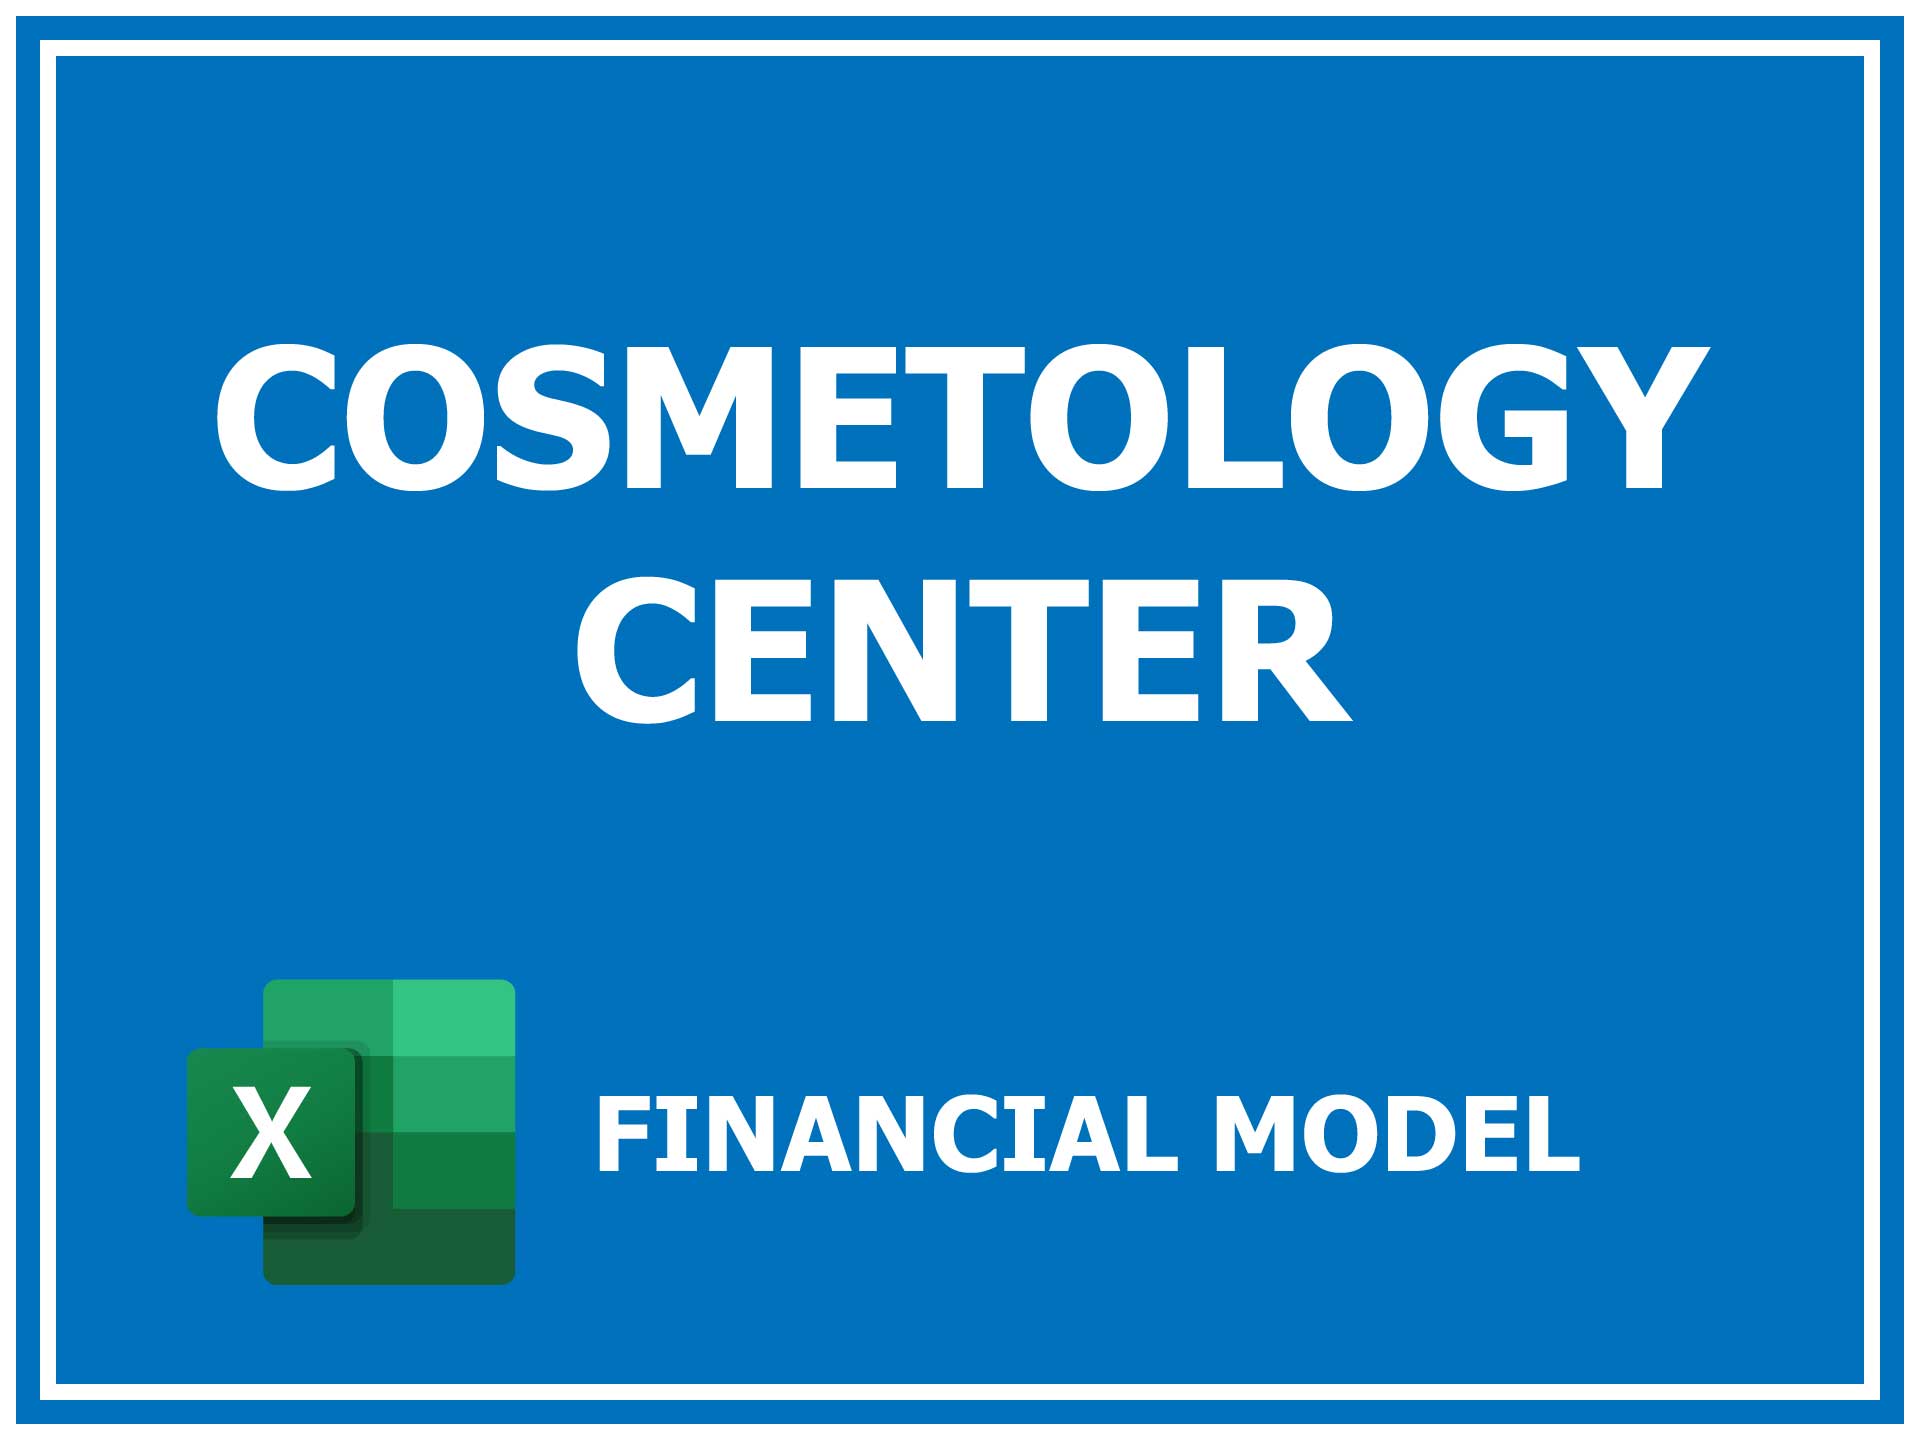 Cosmetology Center